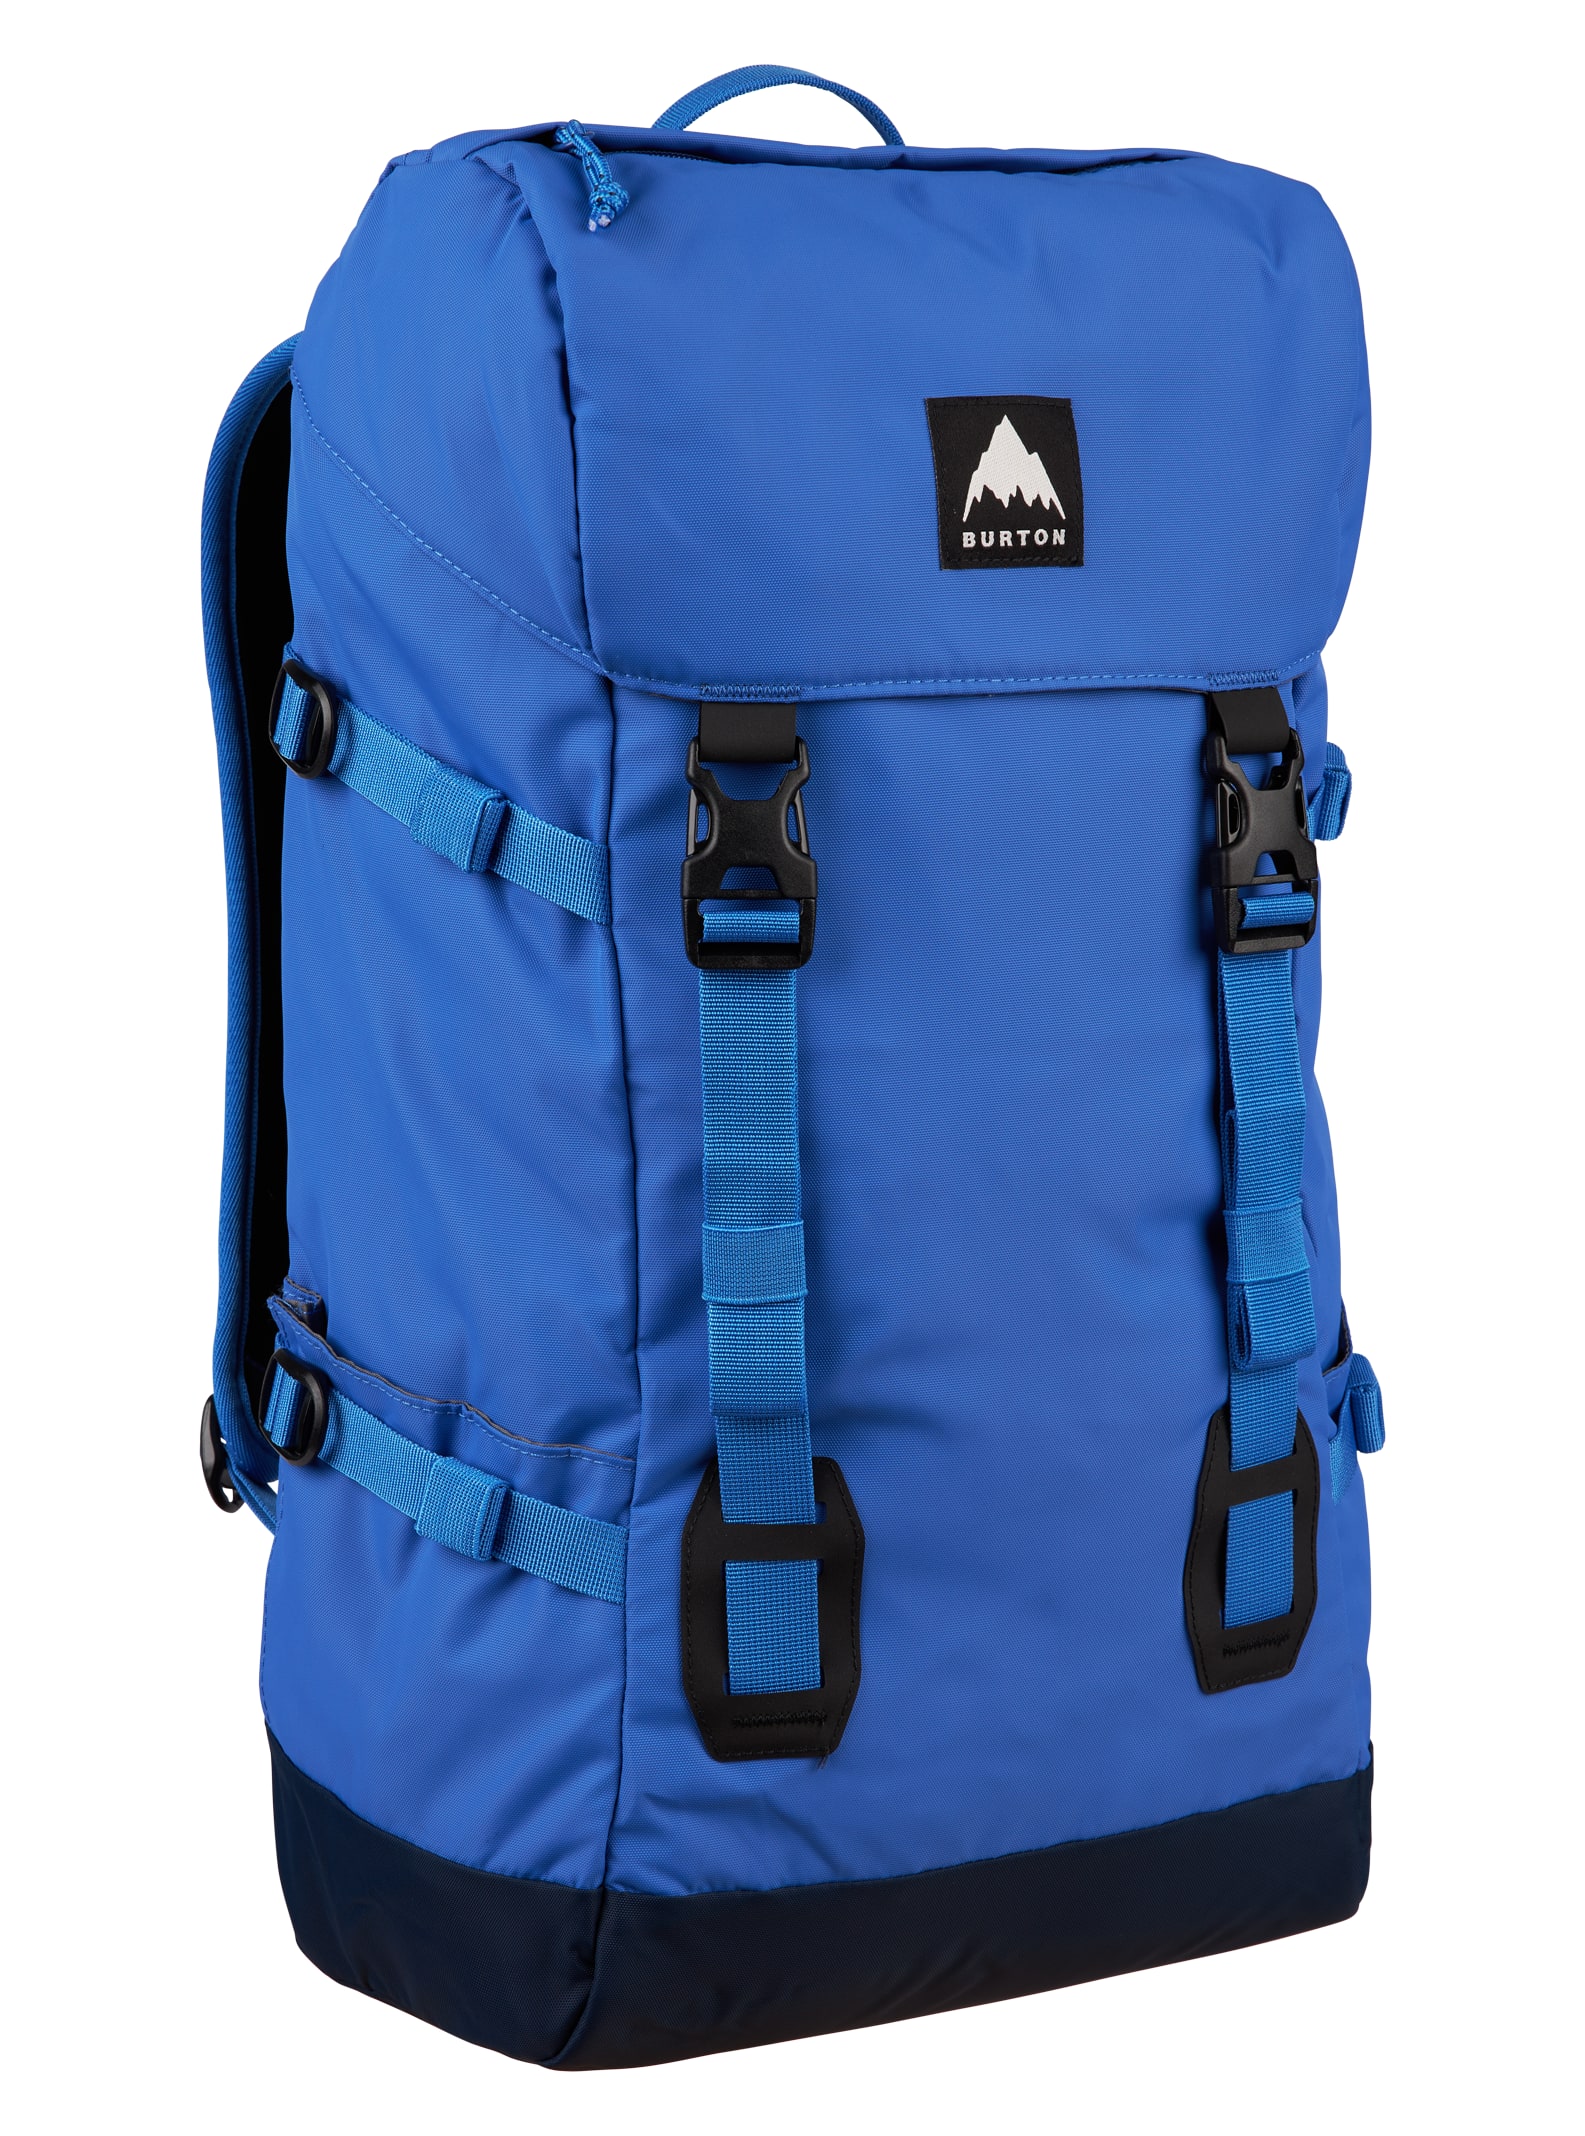 Burton Tinder 2.0 30L Backpack | Burton.com Spring 2022 CH